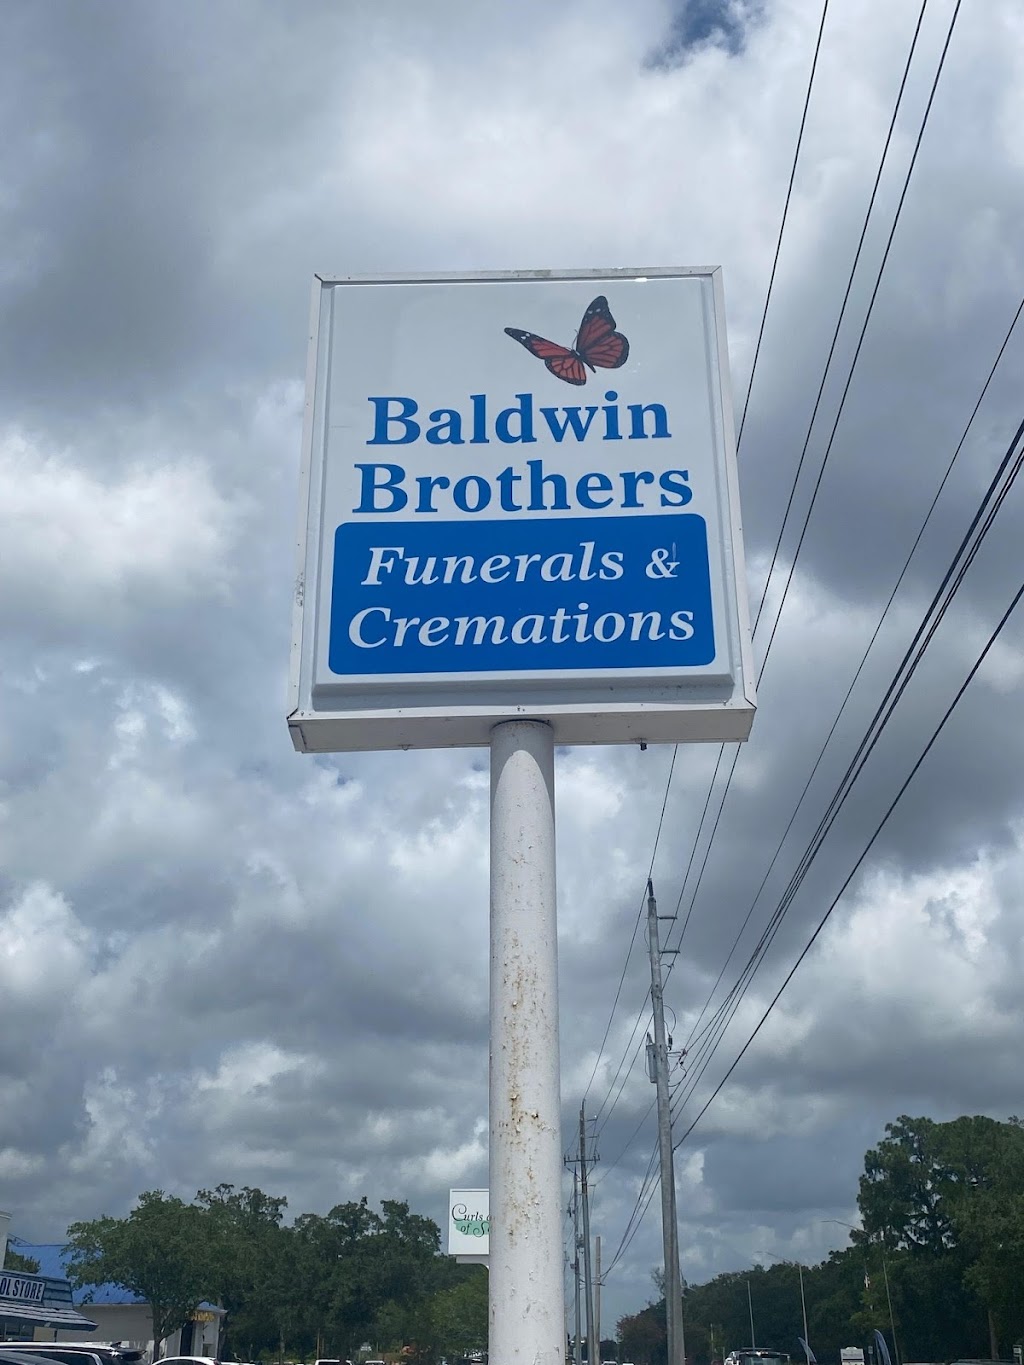 Baldwin Brothers A Funeral & Cremation Society: Sarasota | 4609 Bee Ridge Rd, Sarasota, FL 34233, USA | Phone: (941) 263-2203